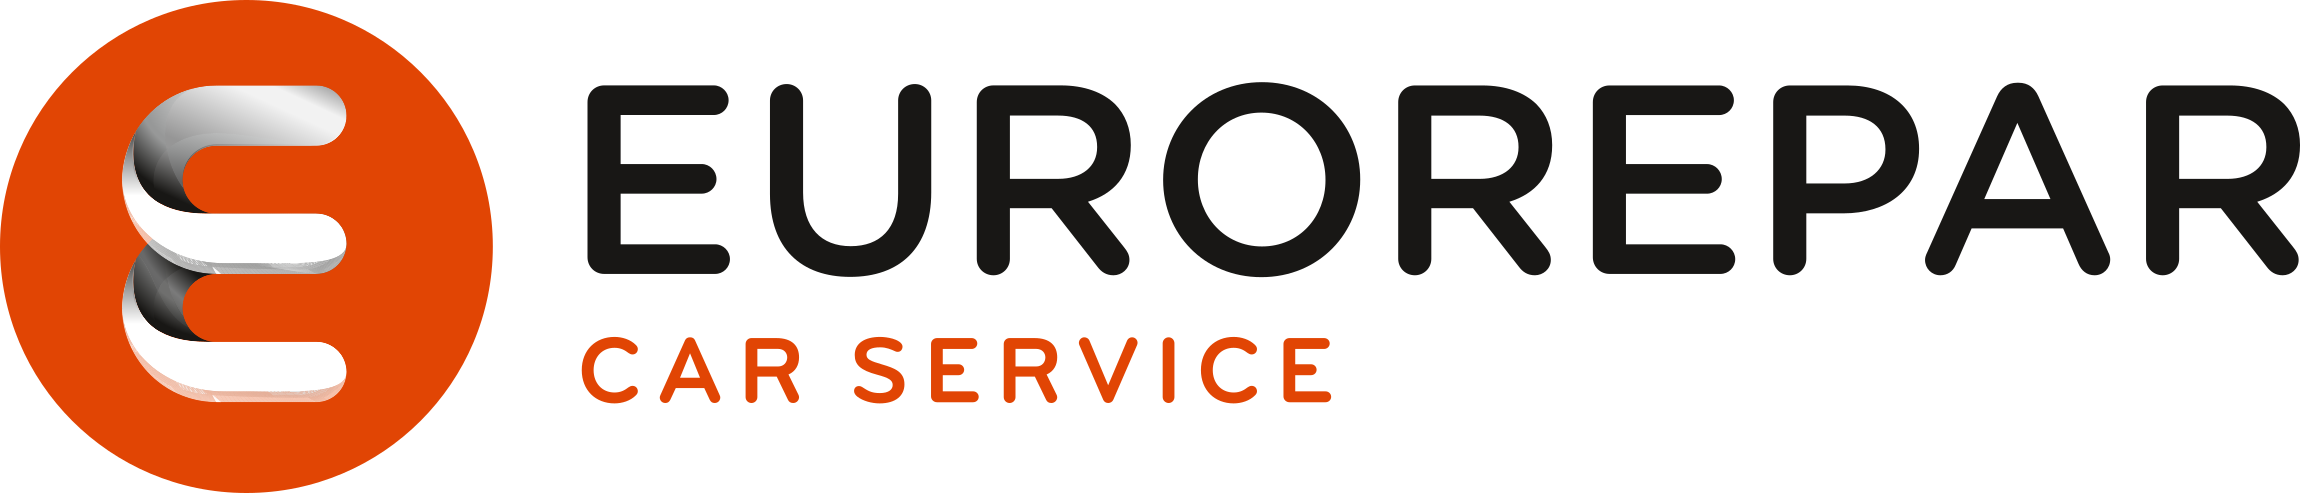 eurorepar_logo.png